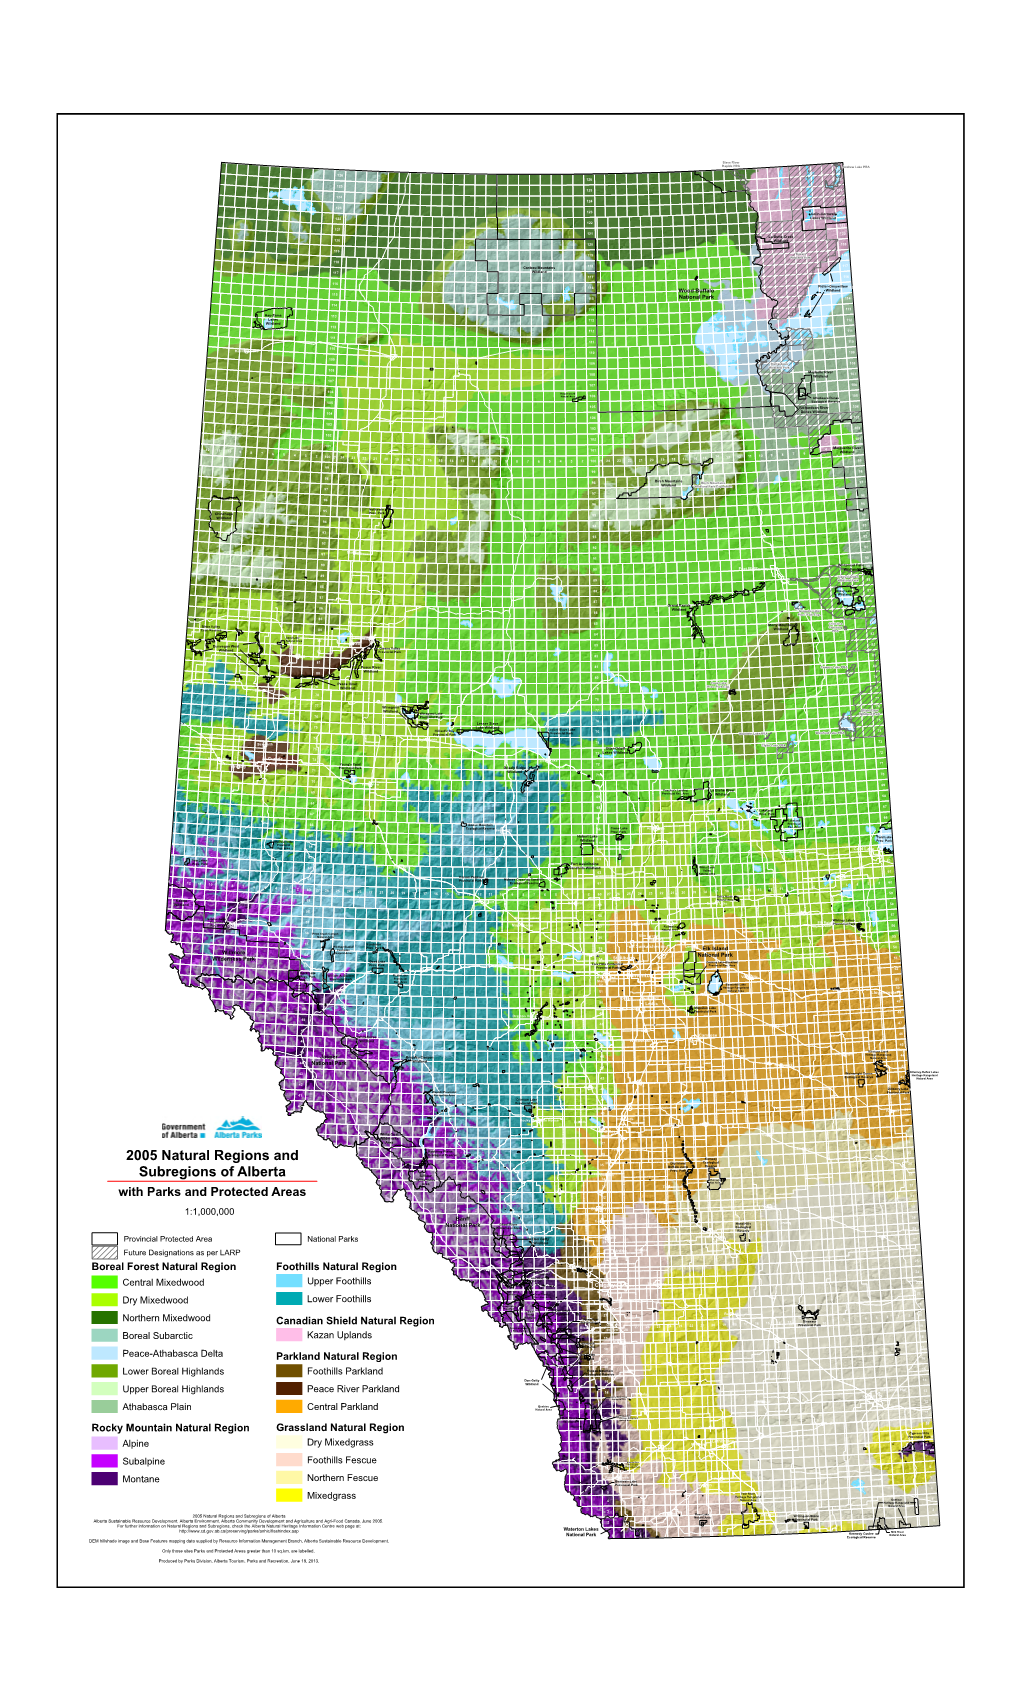 2005 Natural Regions and Subregions of Alberta